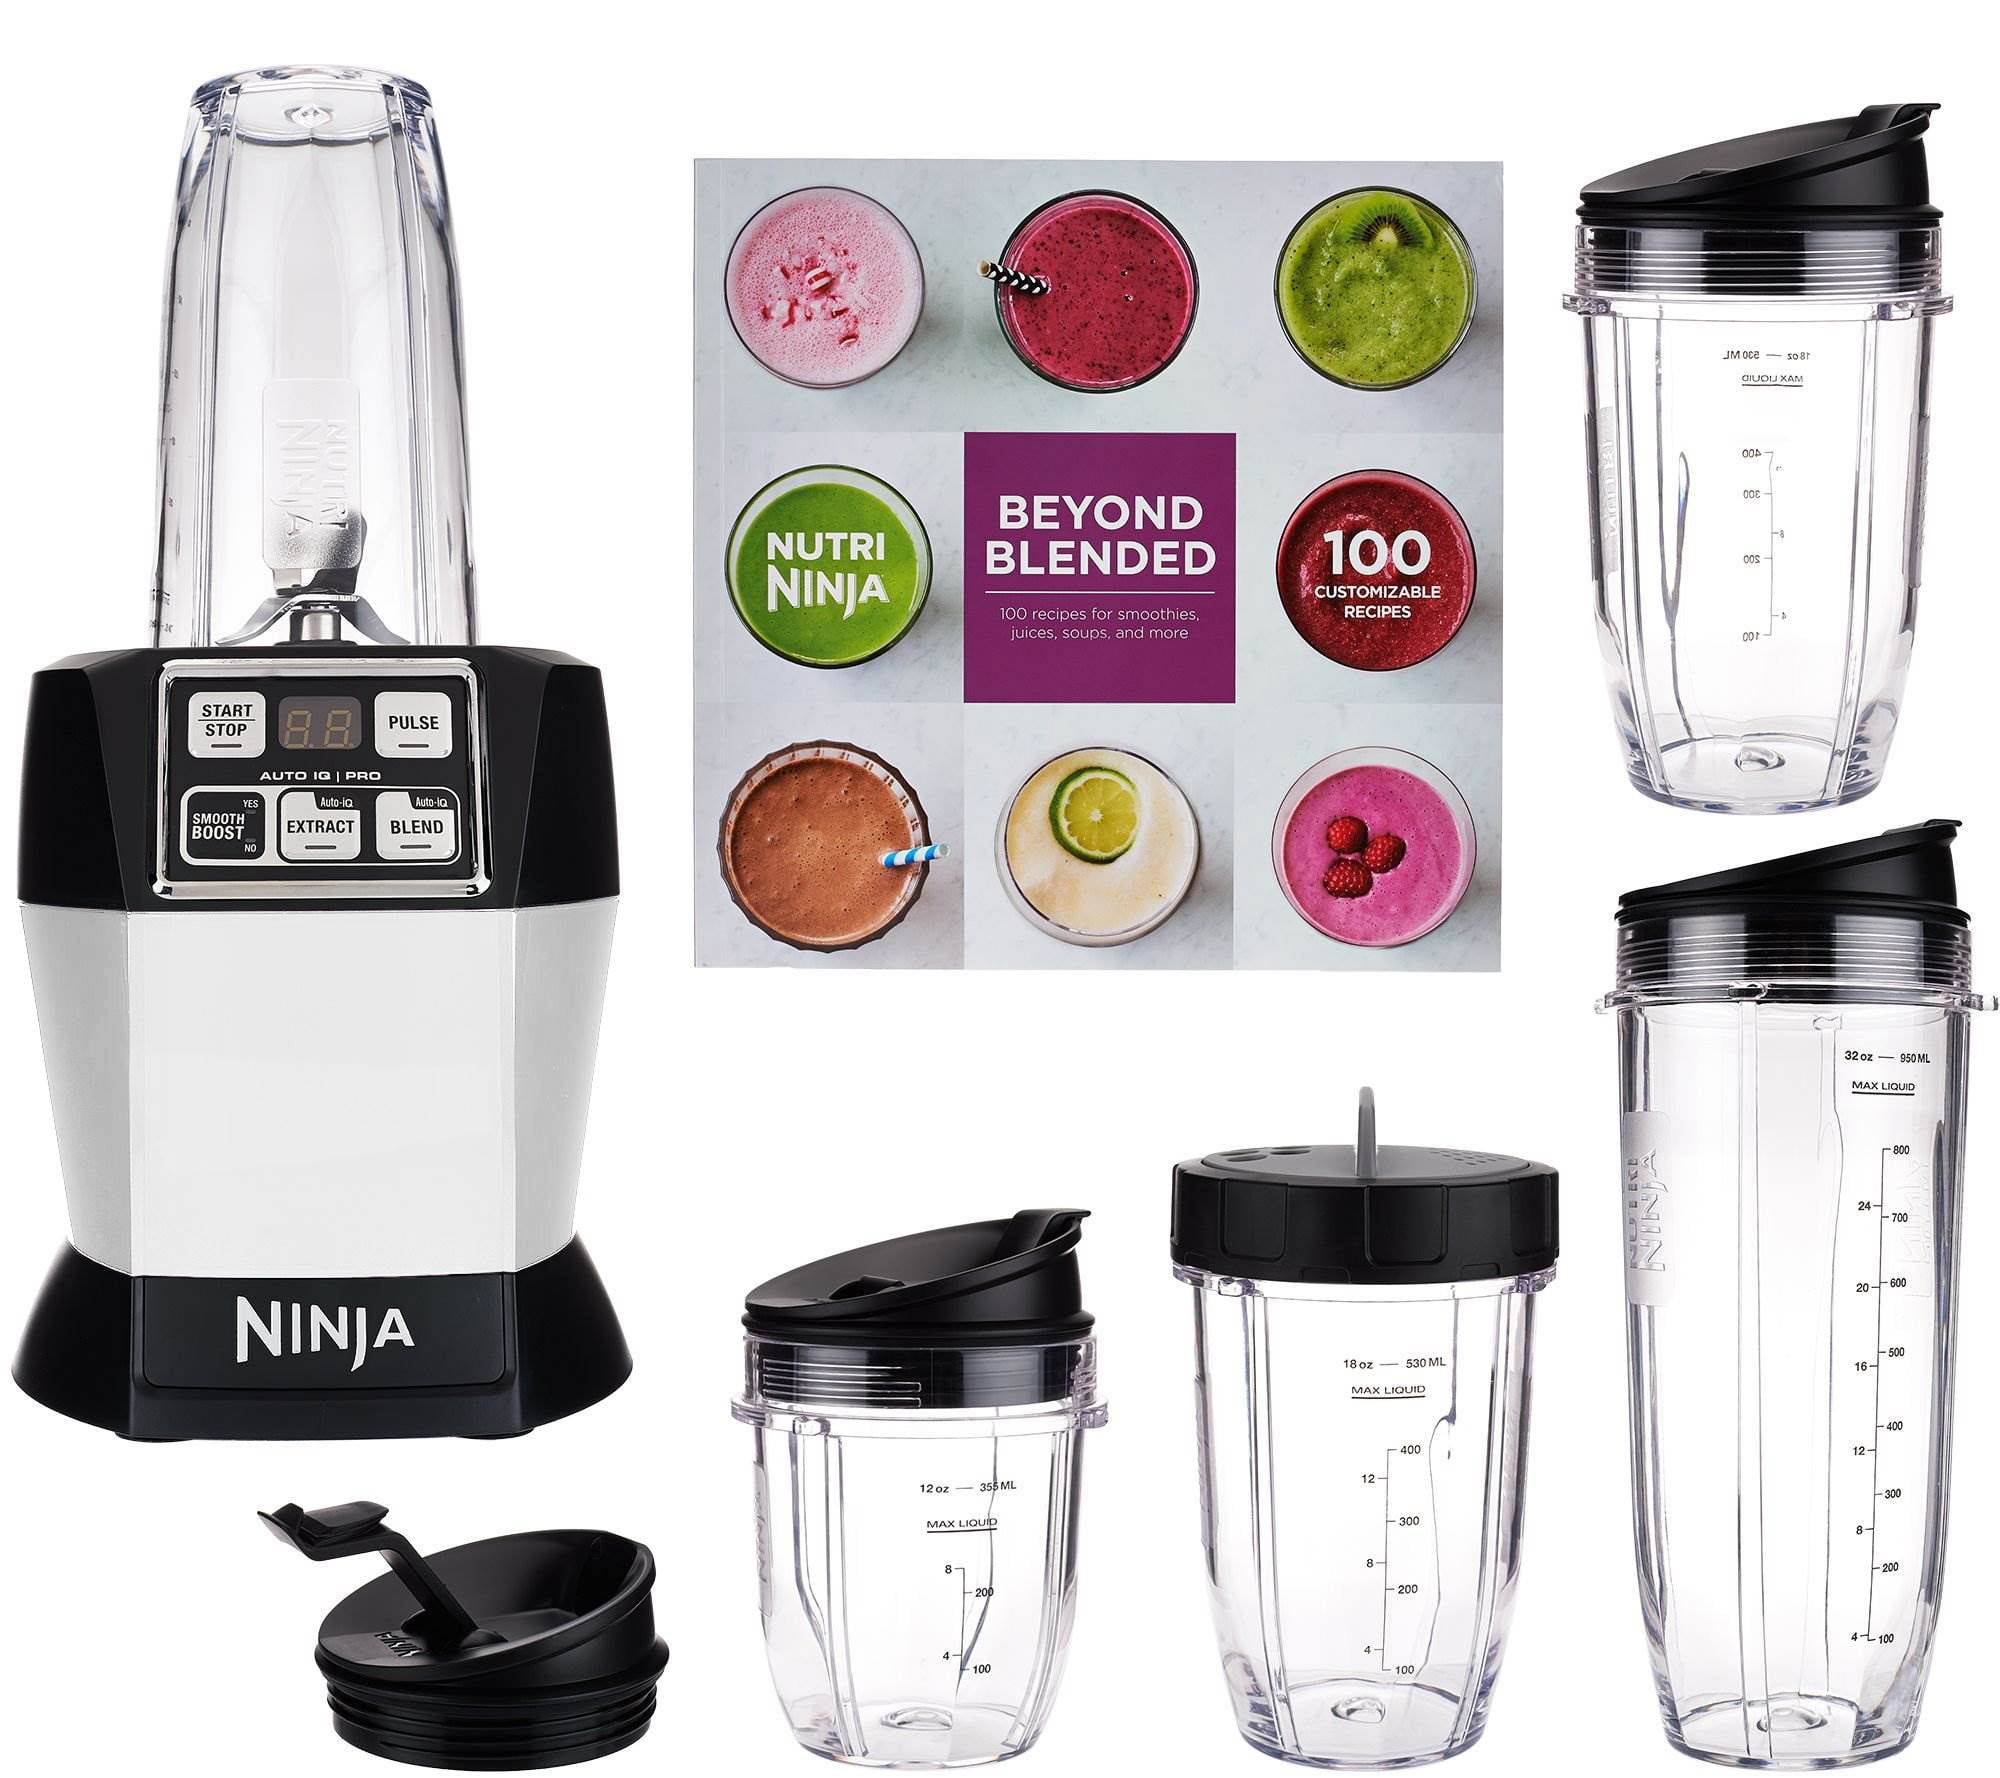 Nutri Ninja Auto iQ Pro Complete Blender 5 To Go Cups & 4 Lids